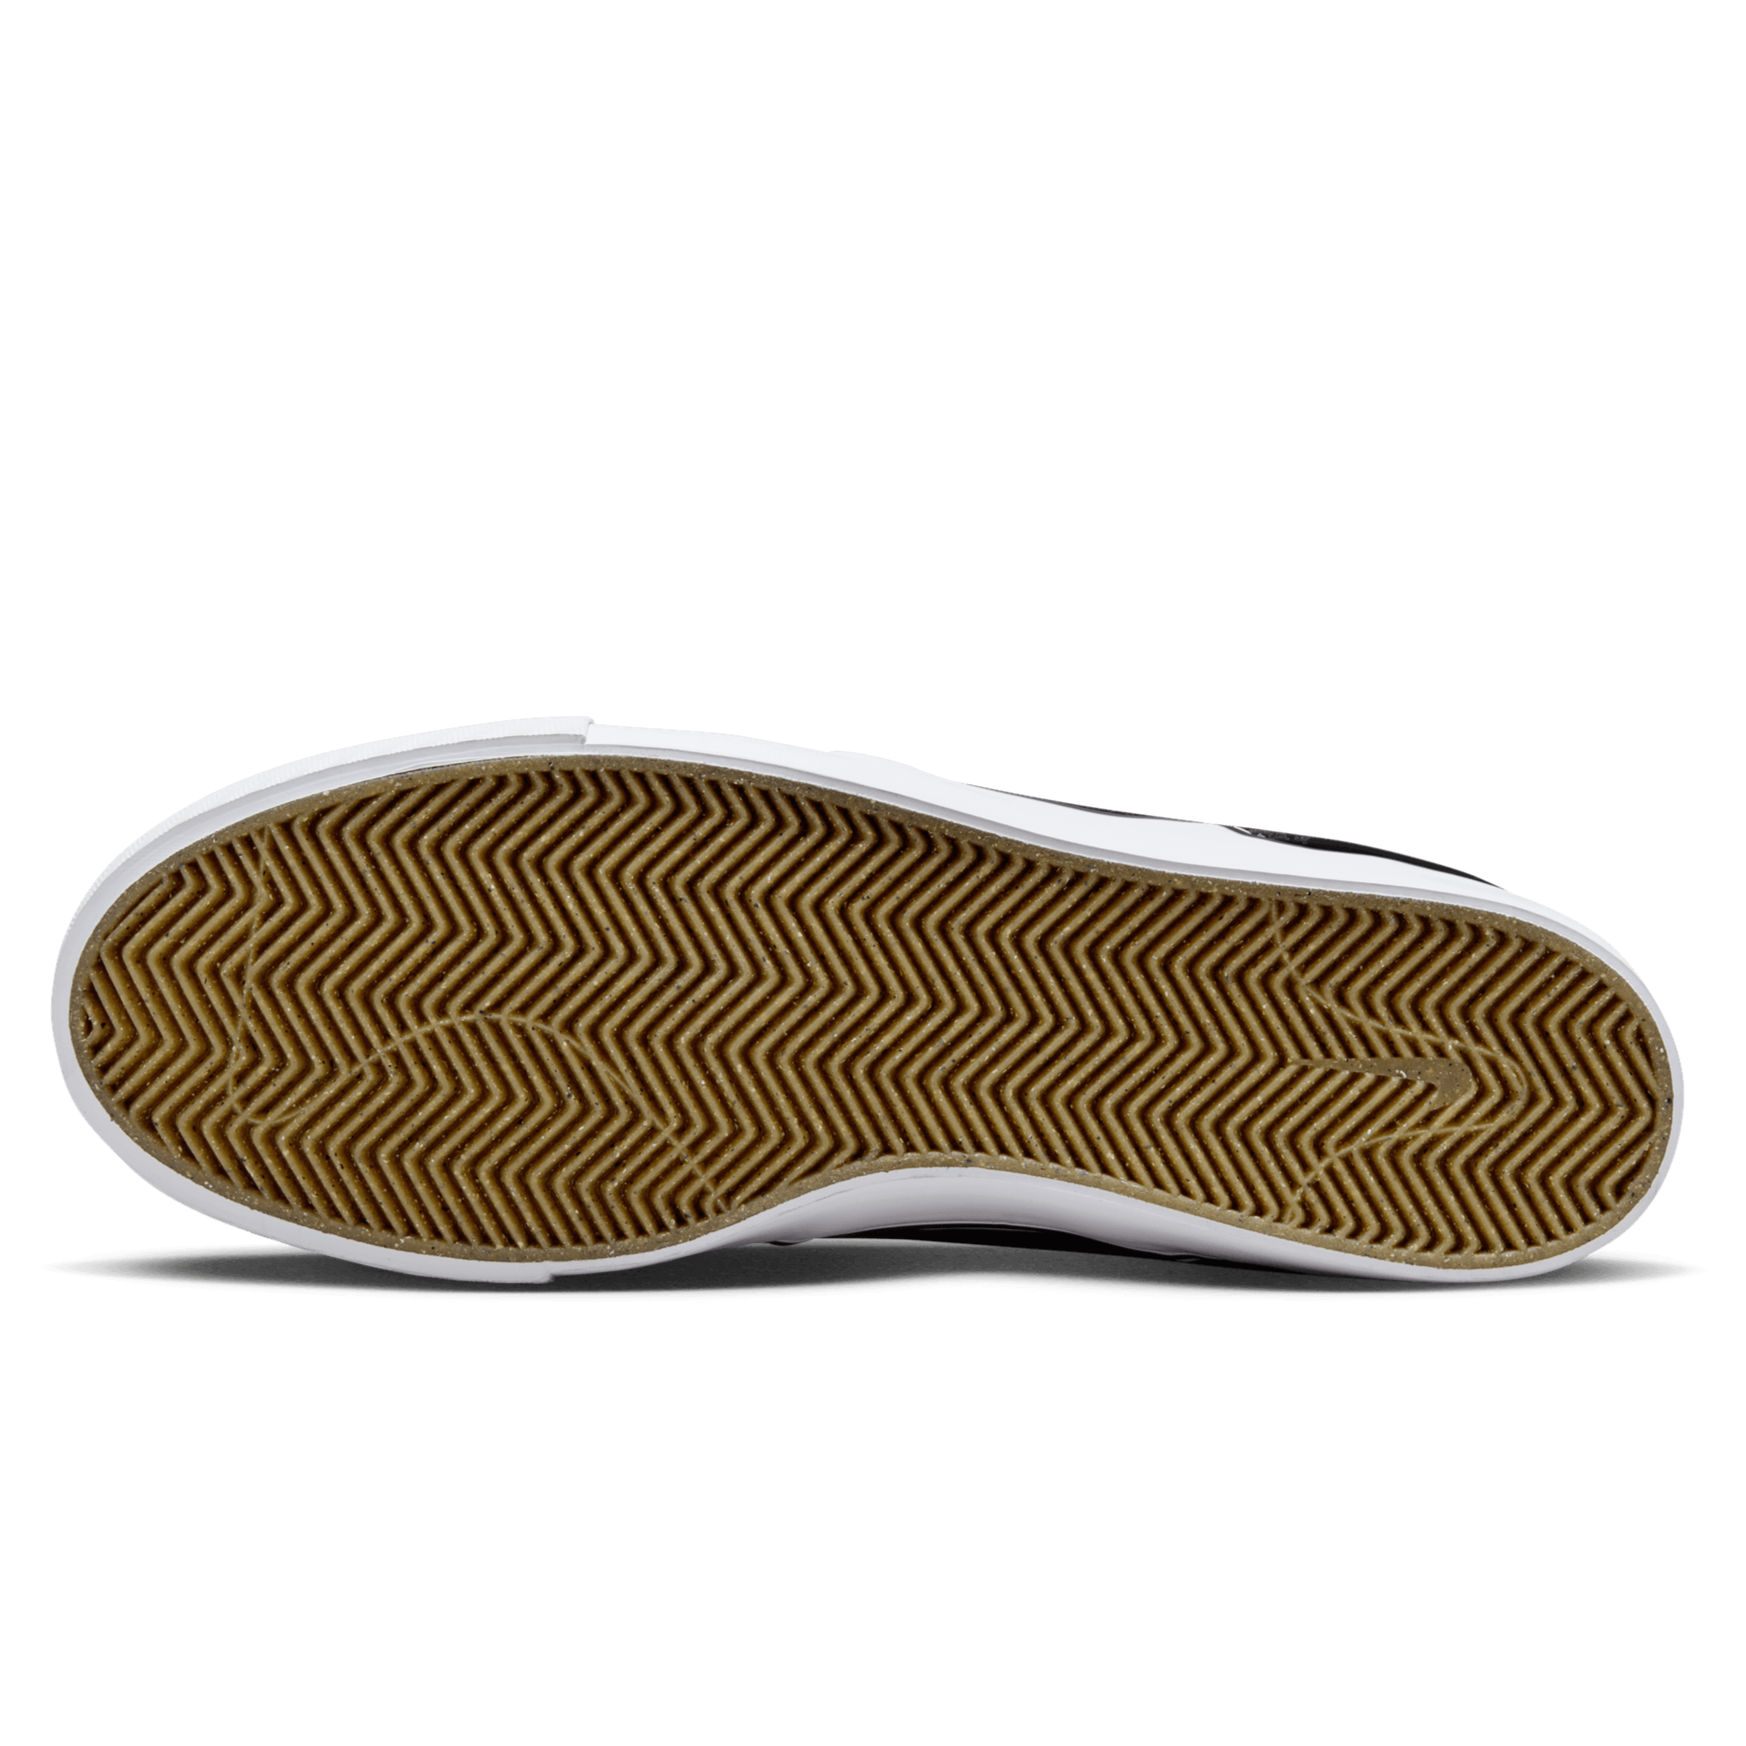 Black/White Janoski OG+ Nike SB Skate Shoe Bottom